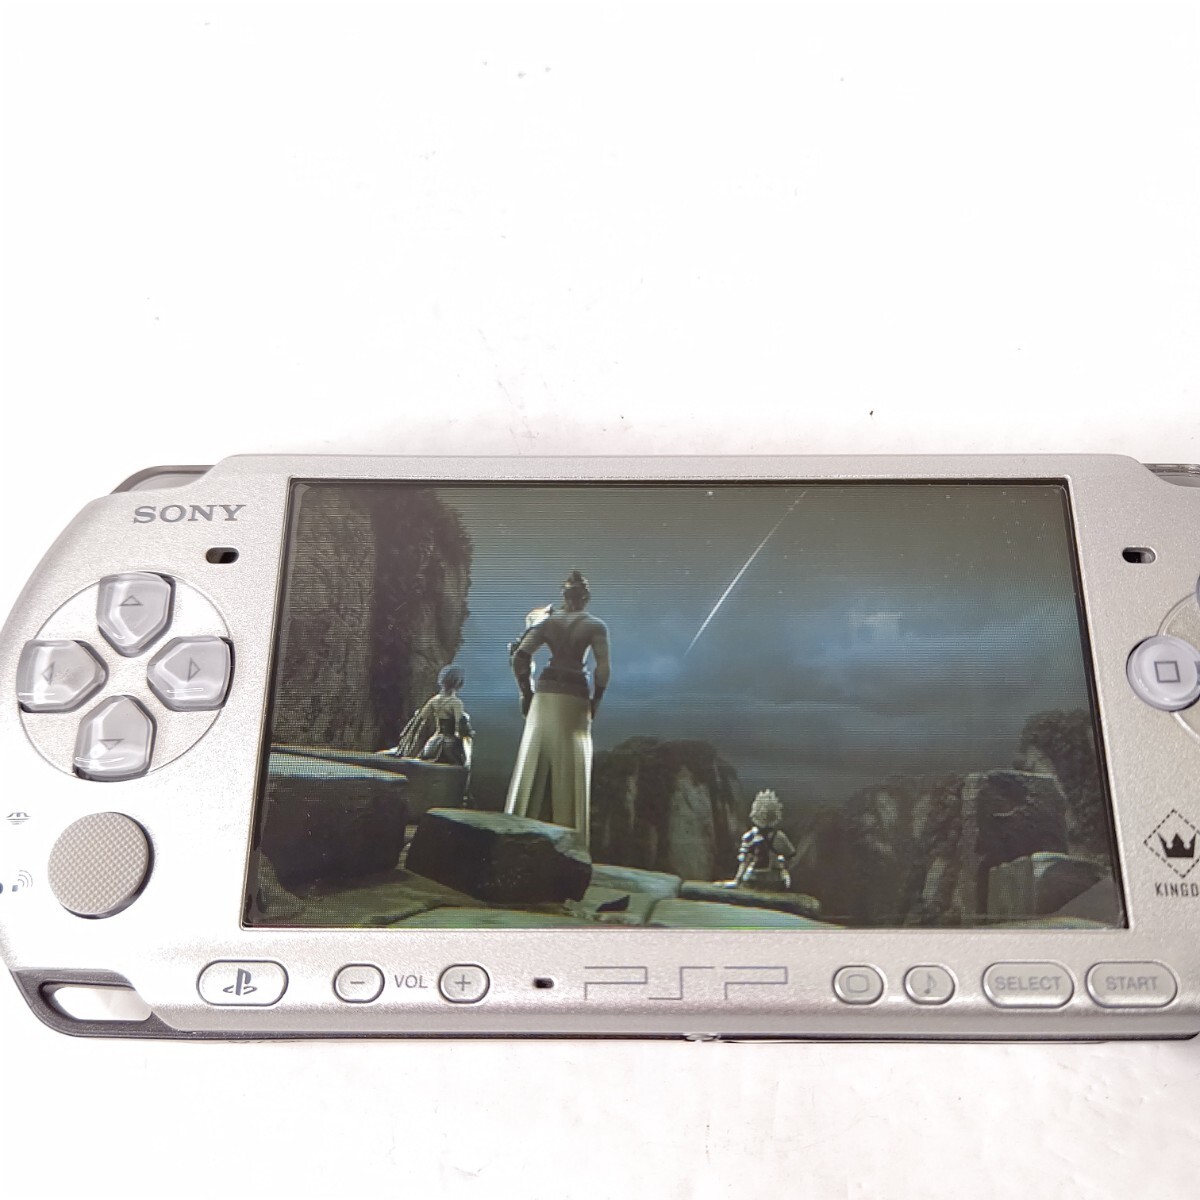  Sony psp3000 Kingdom Hearts балка sbai сон экран превосходный товар 